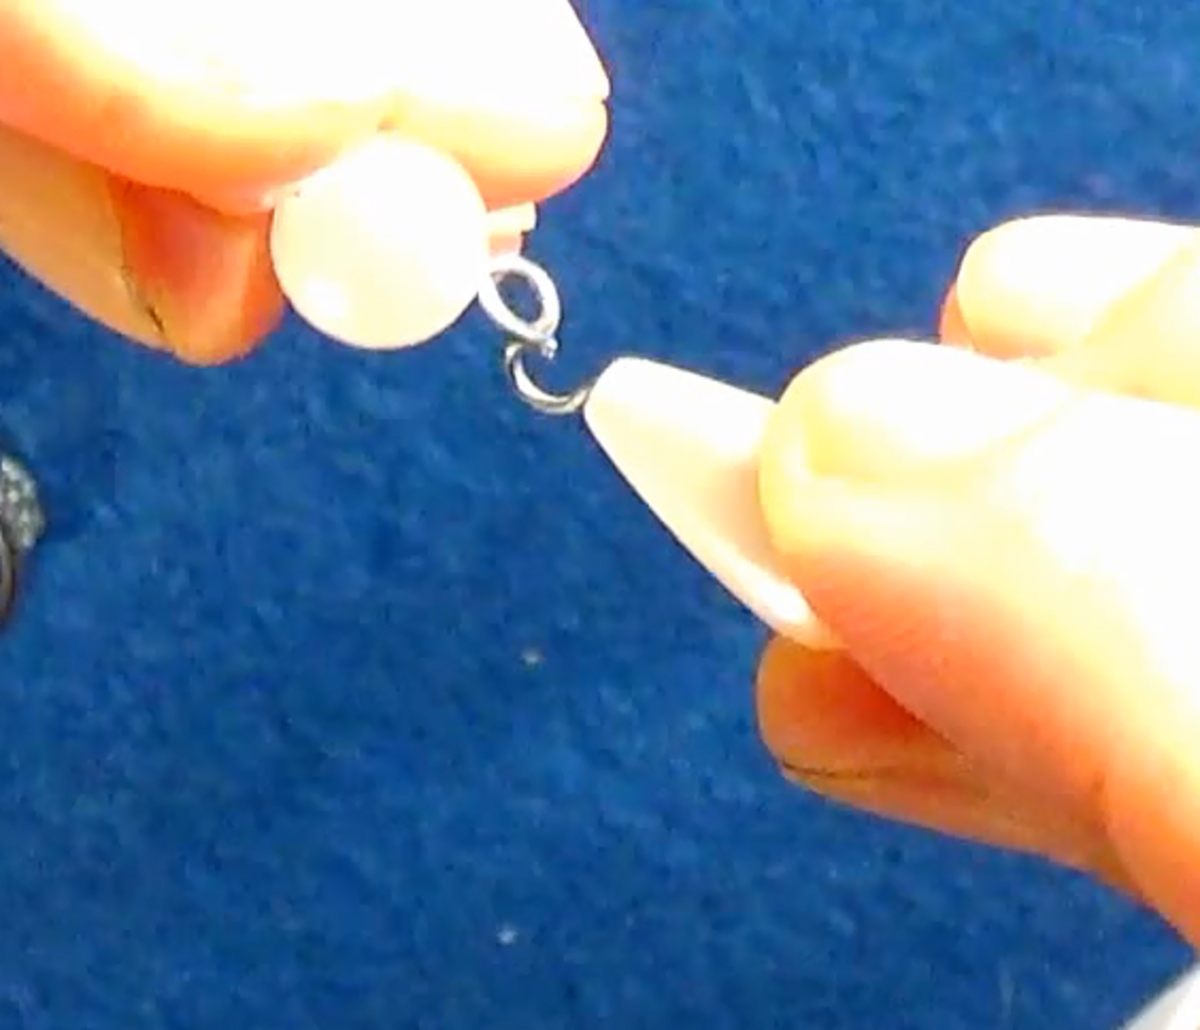 making-a-pair-of-white-pearl-wedding-earrings